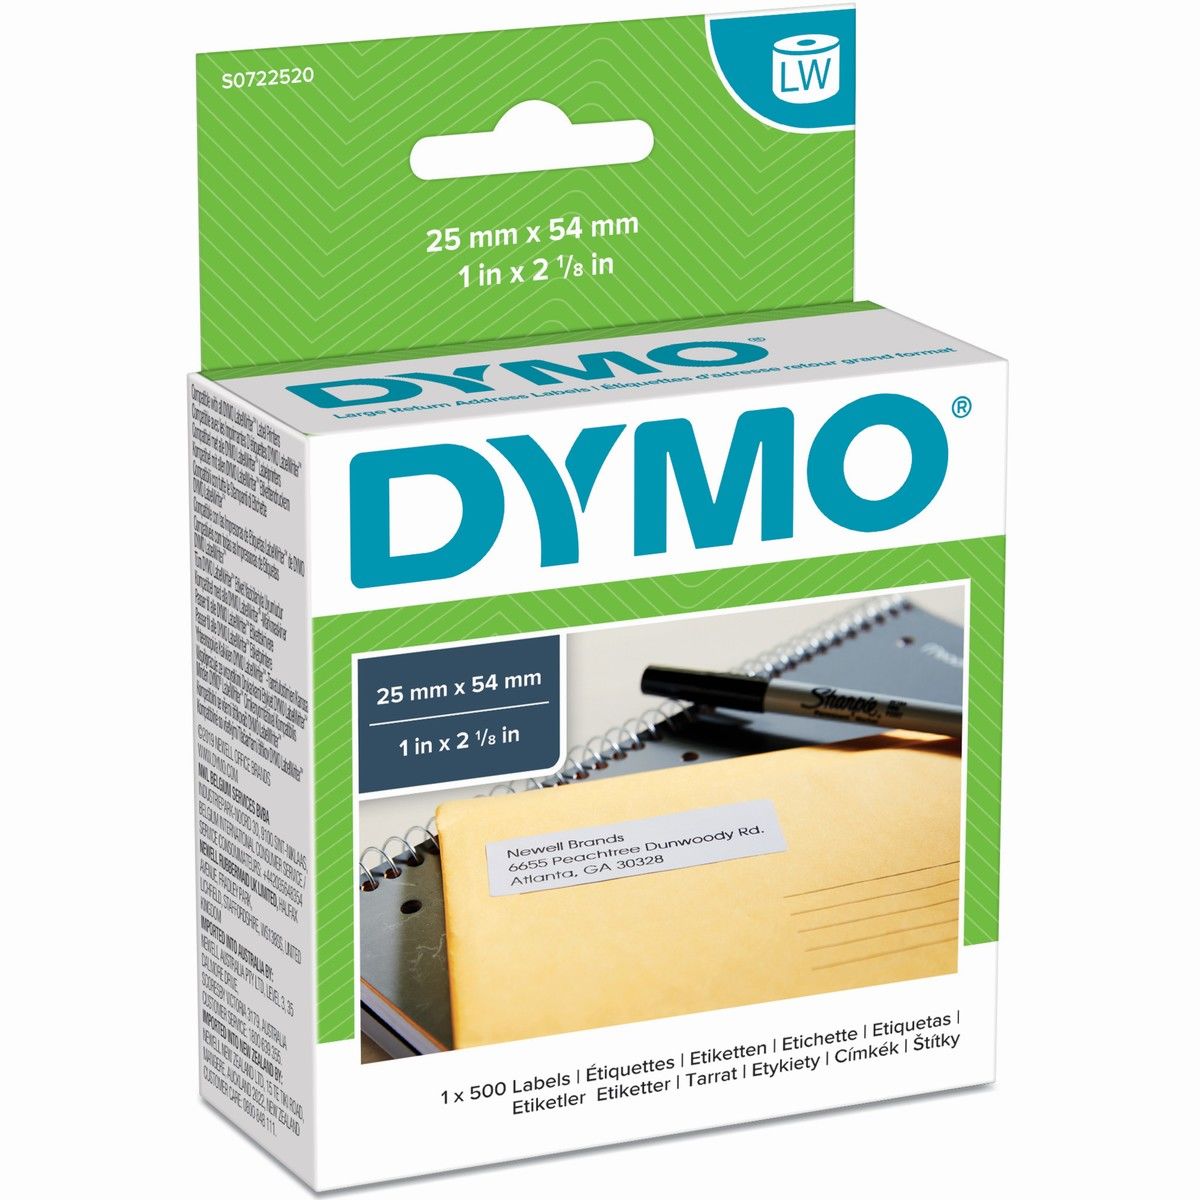 Dymo Etichette LW, S0722520, 25 x 54 mm, 500 pezzi